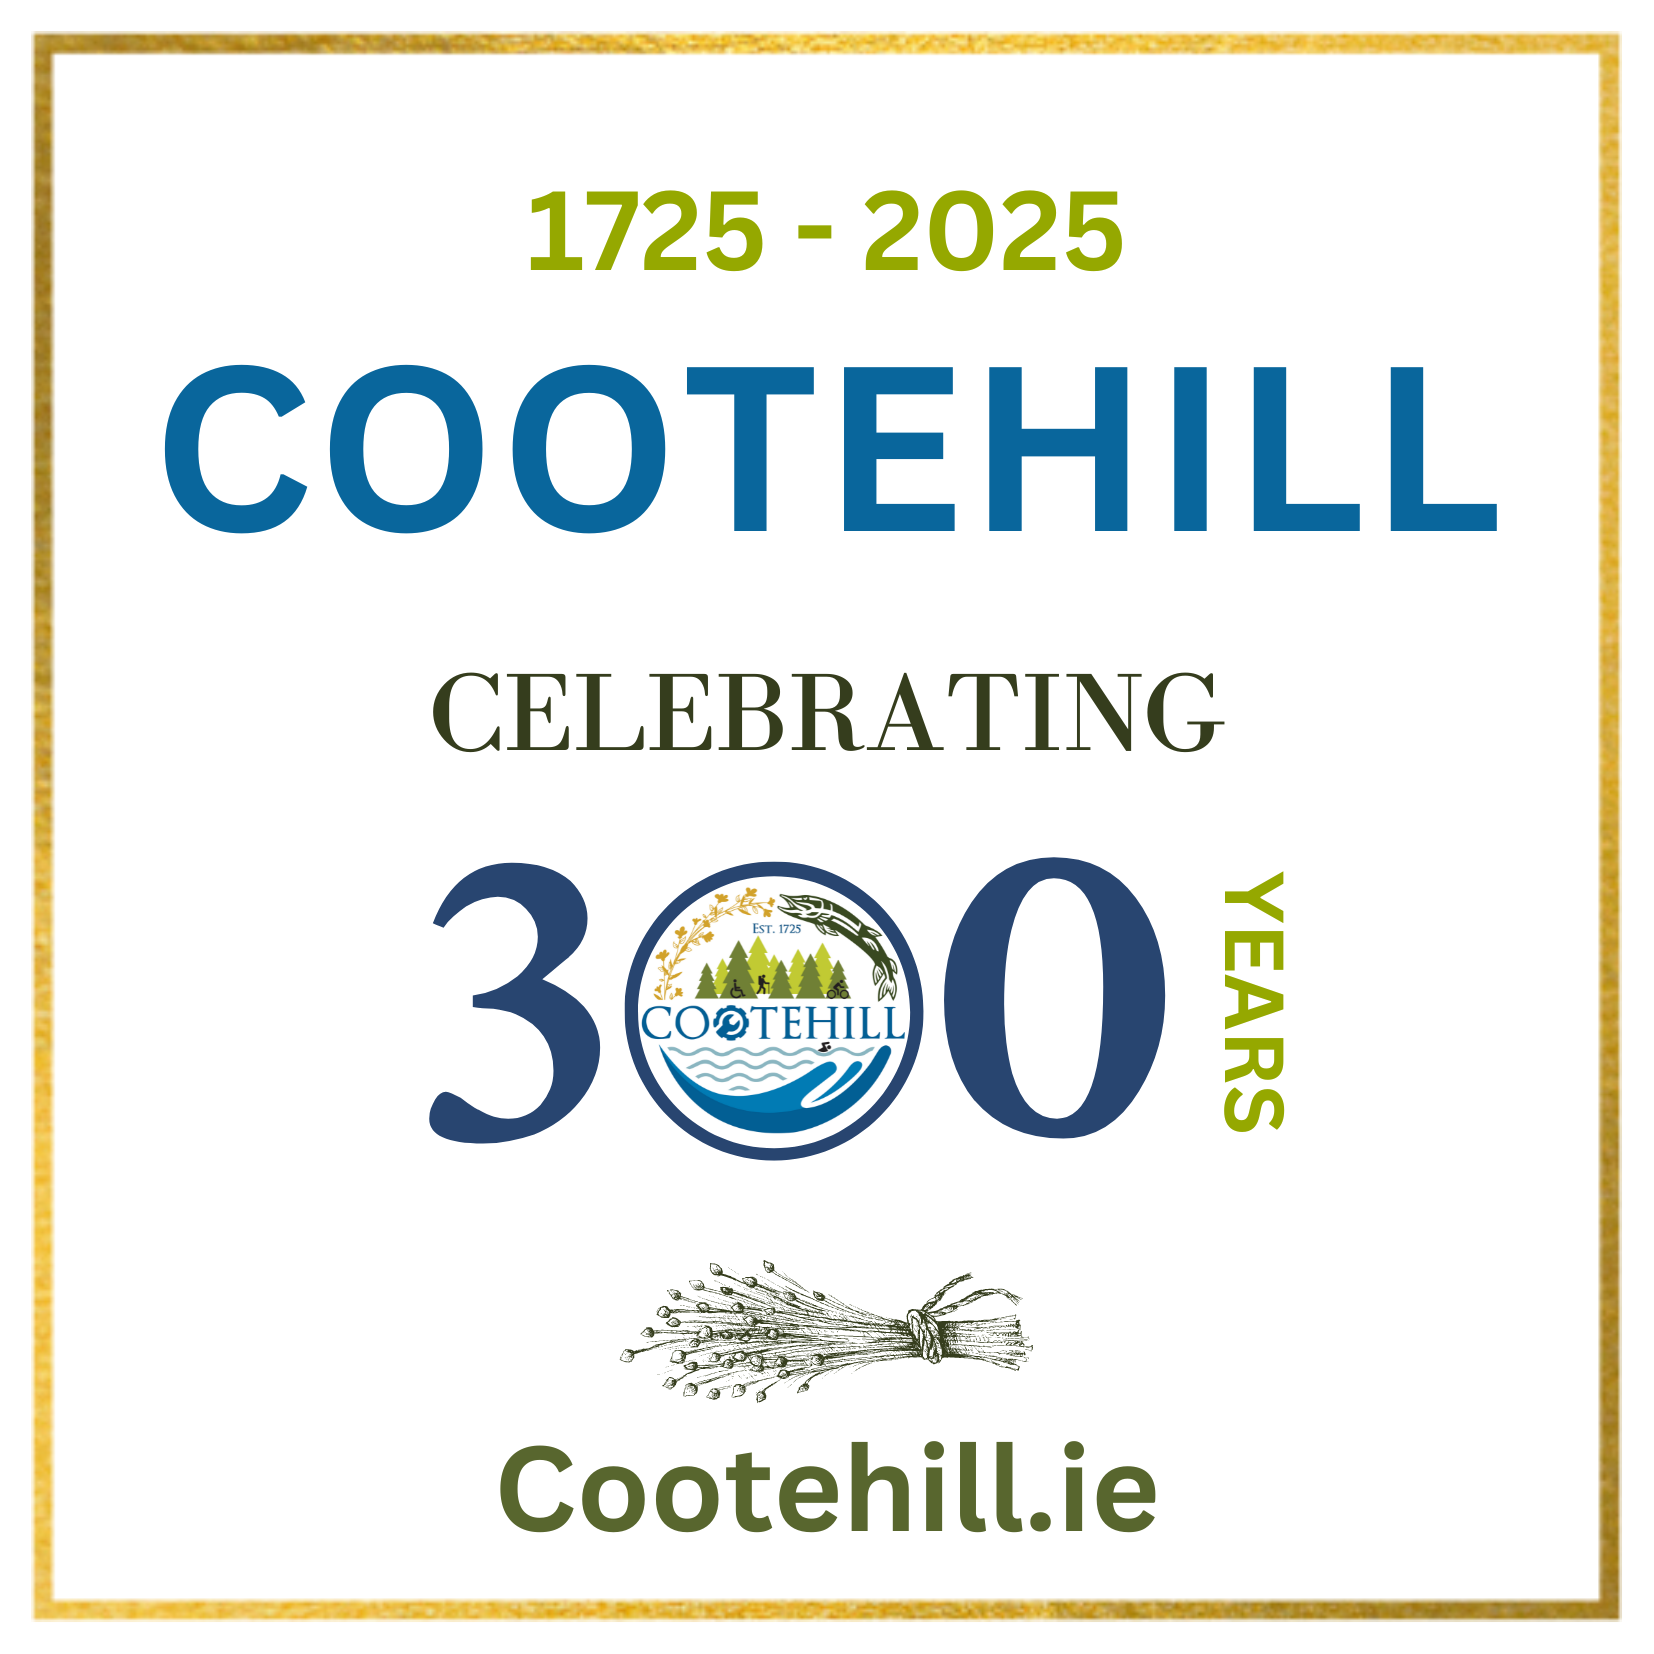 Cootehill tercentenary